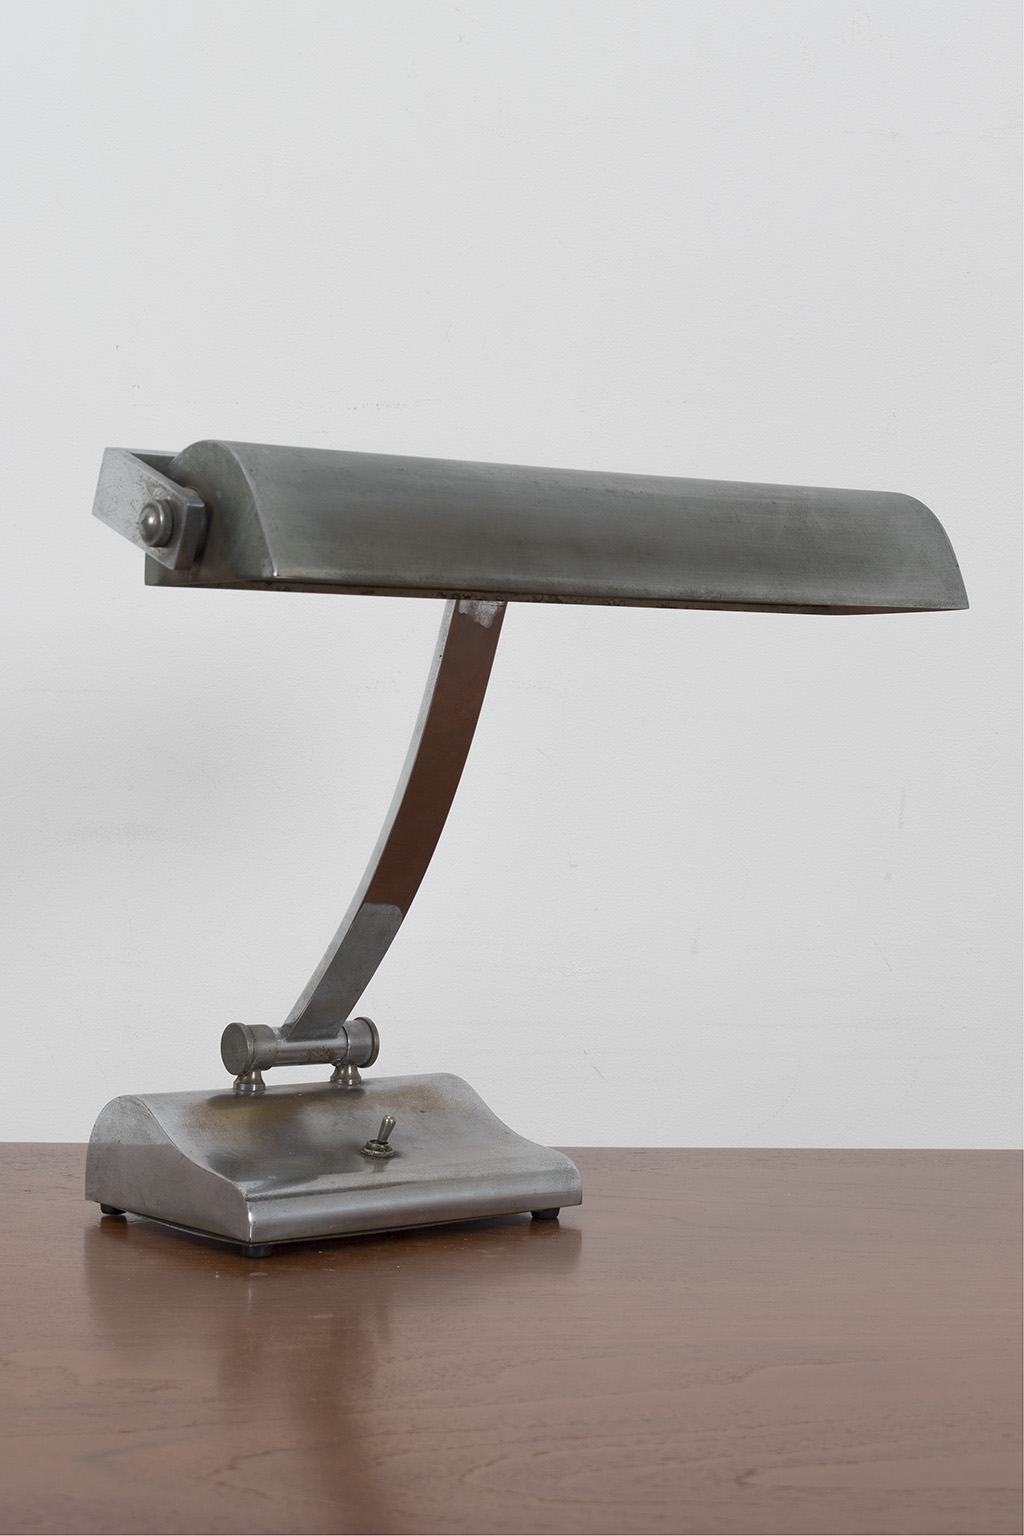 Old brass desk lamp